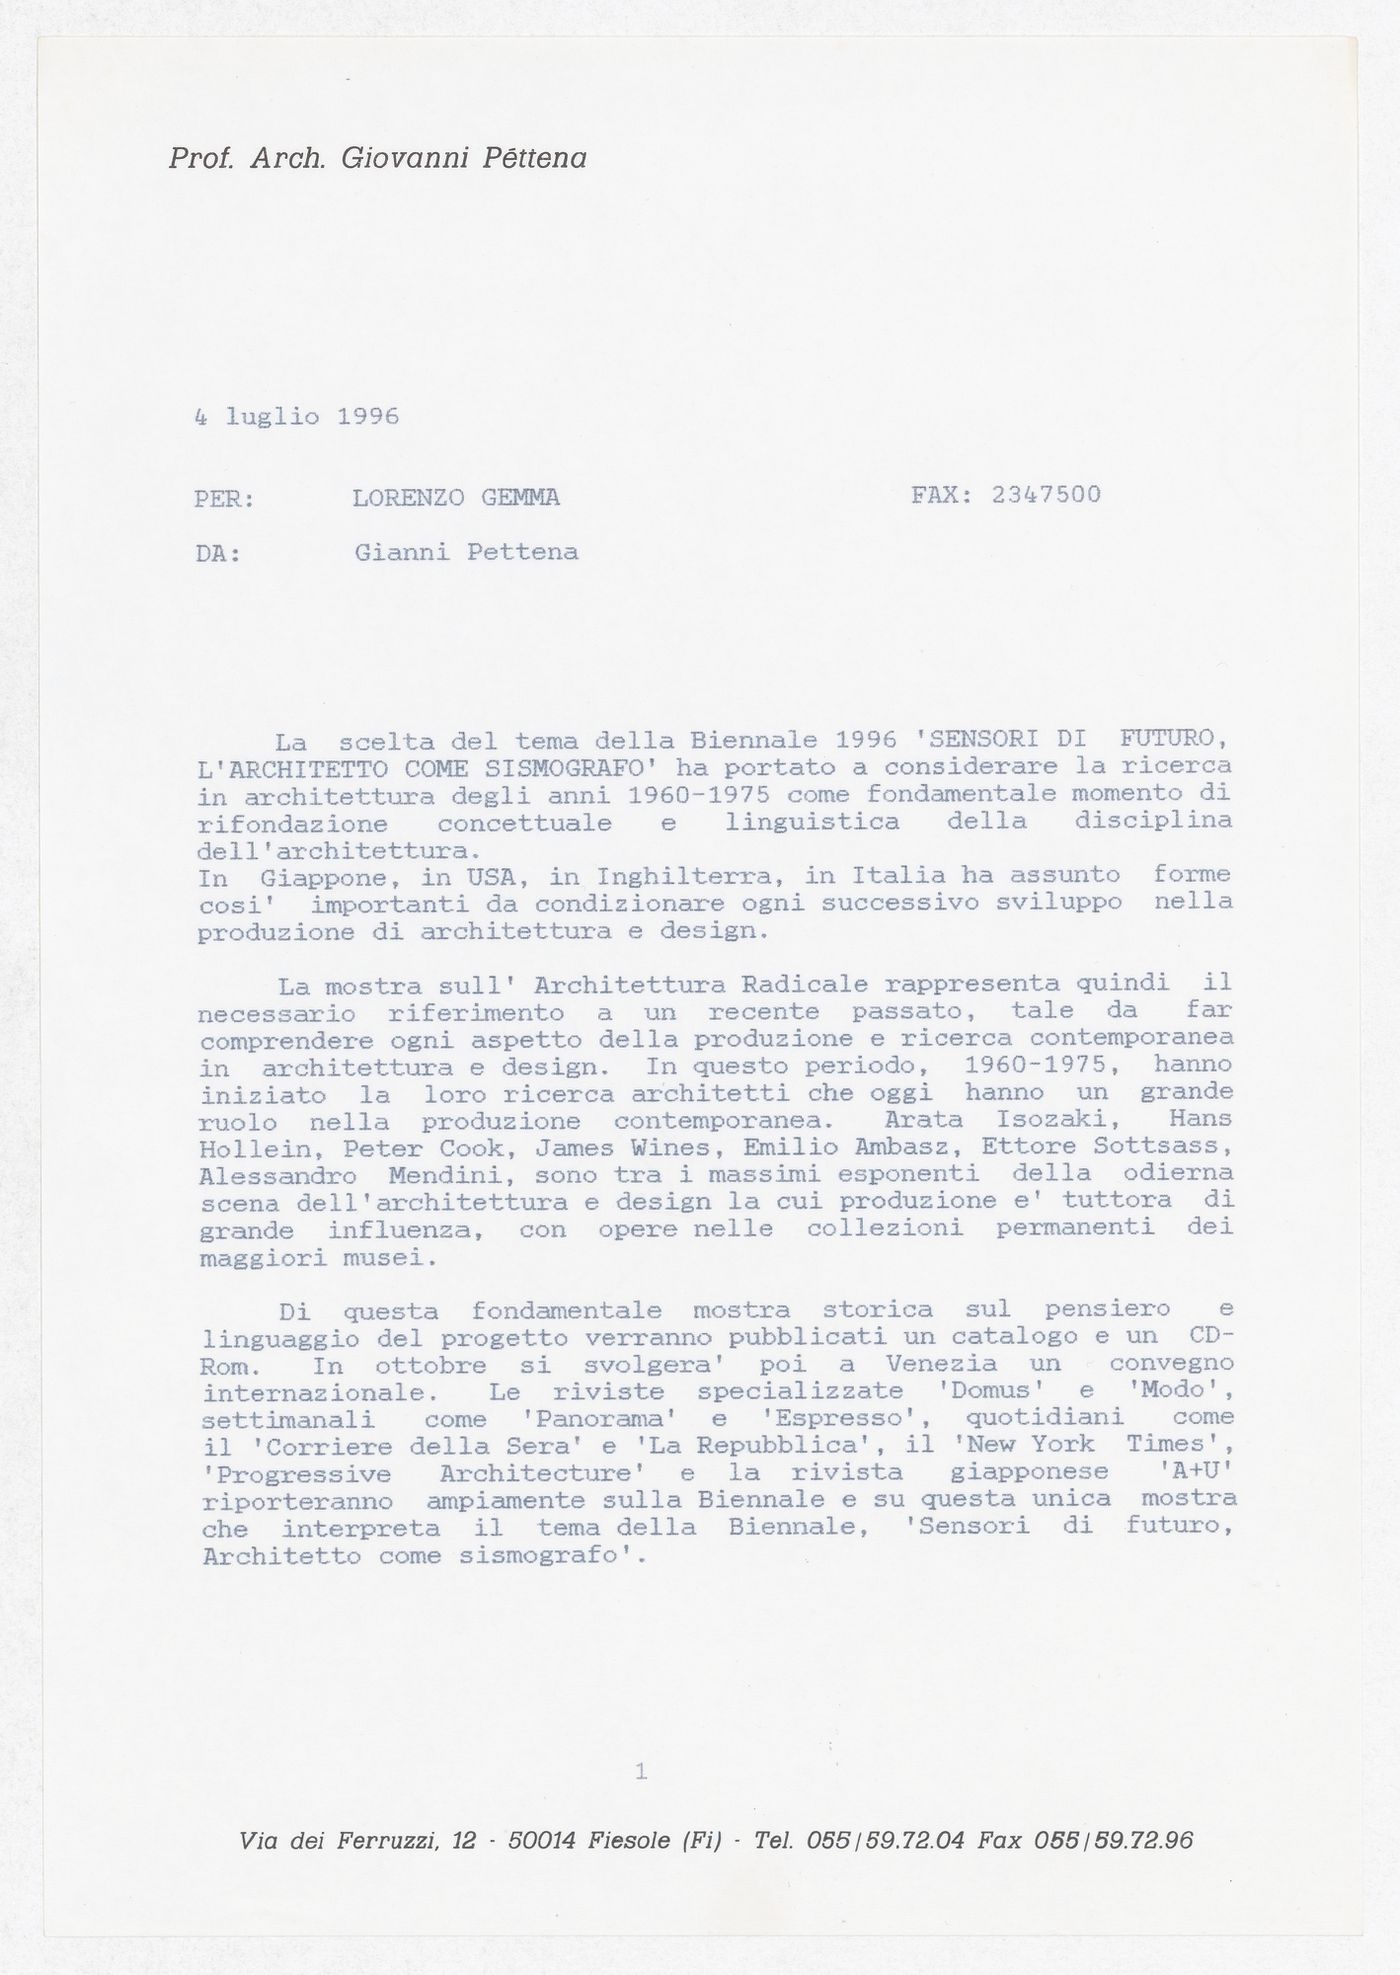 Correspondence to Lorenza Gemma regarding the exhibition Radicals. Architettura e Design 1960-1975